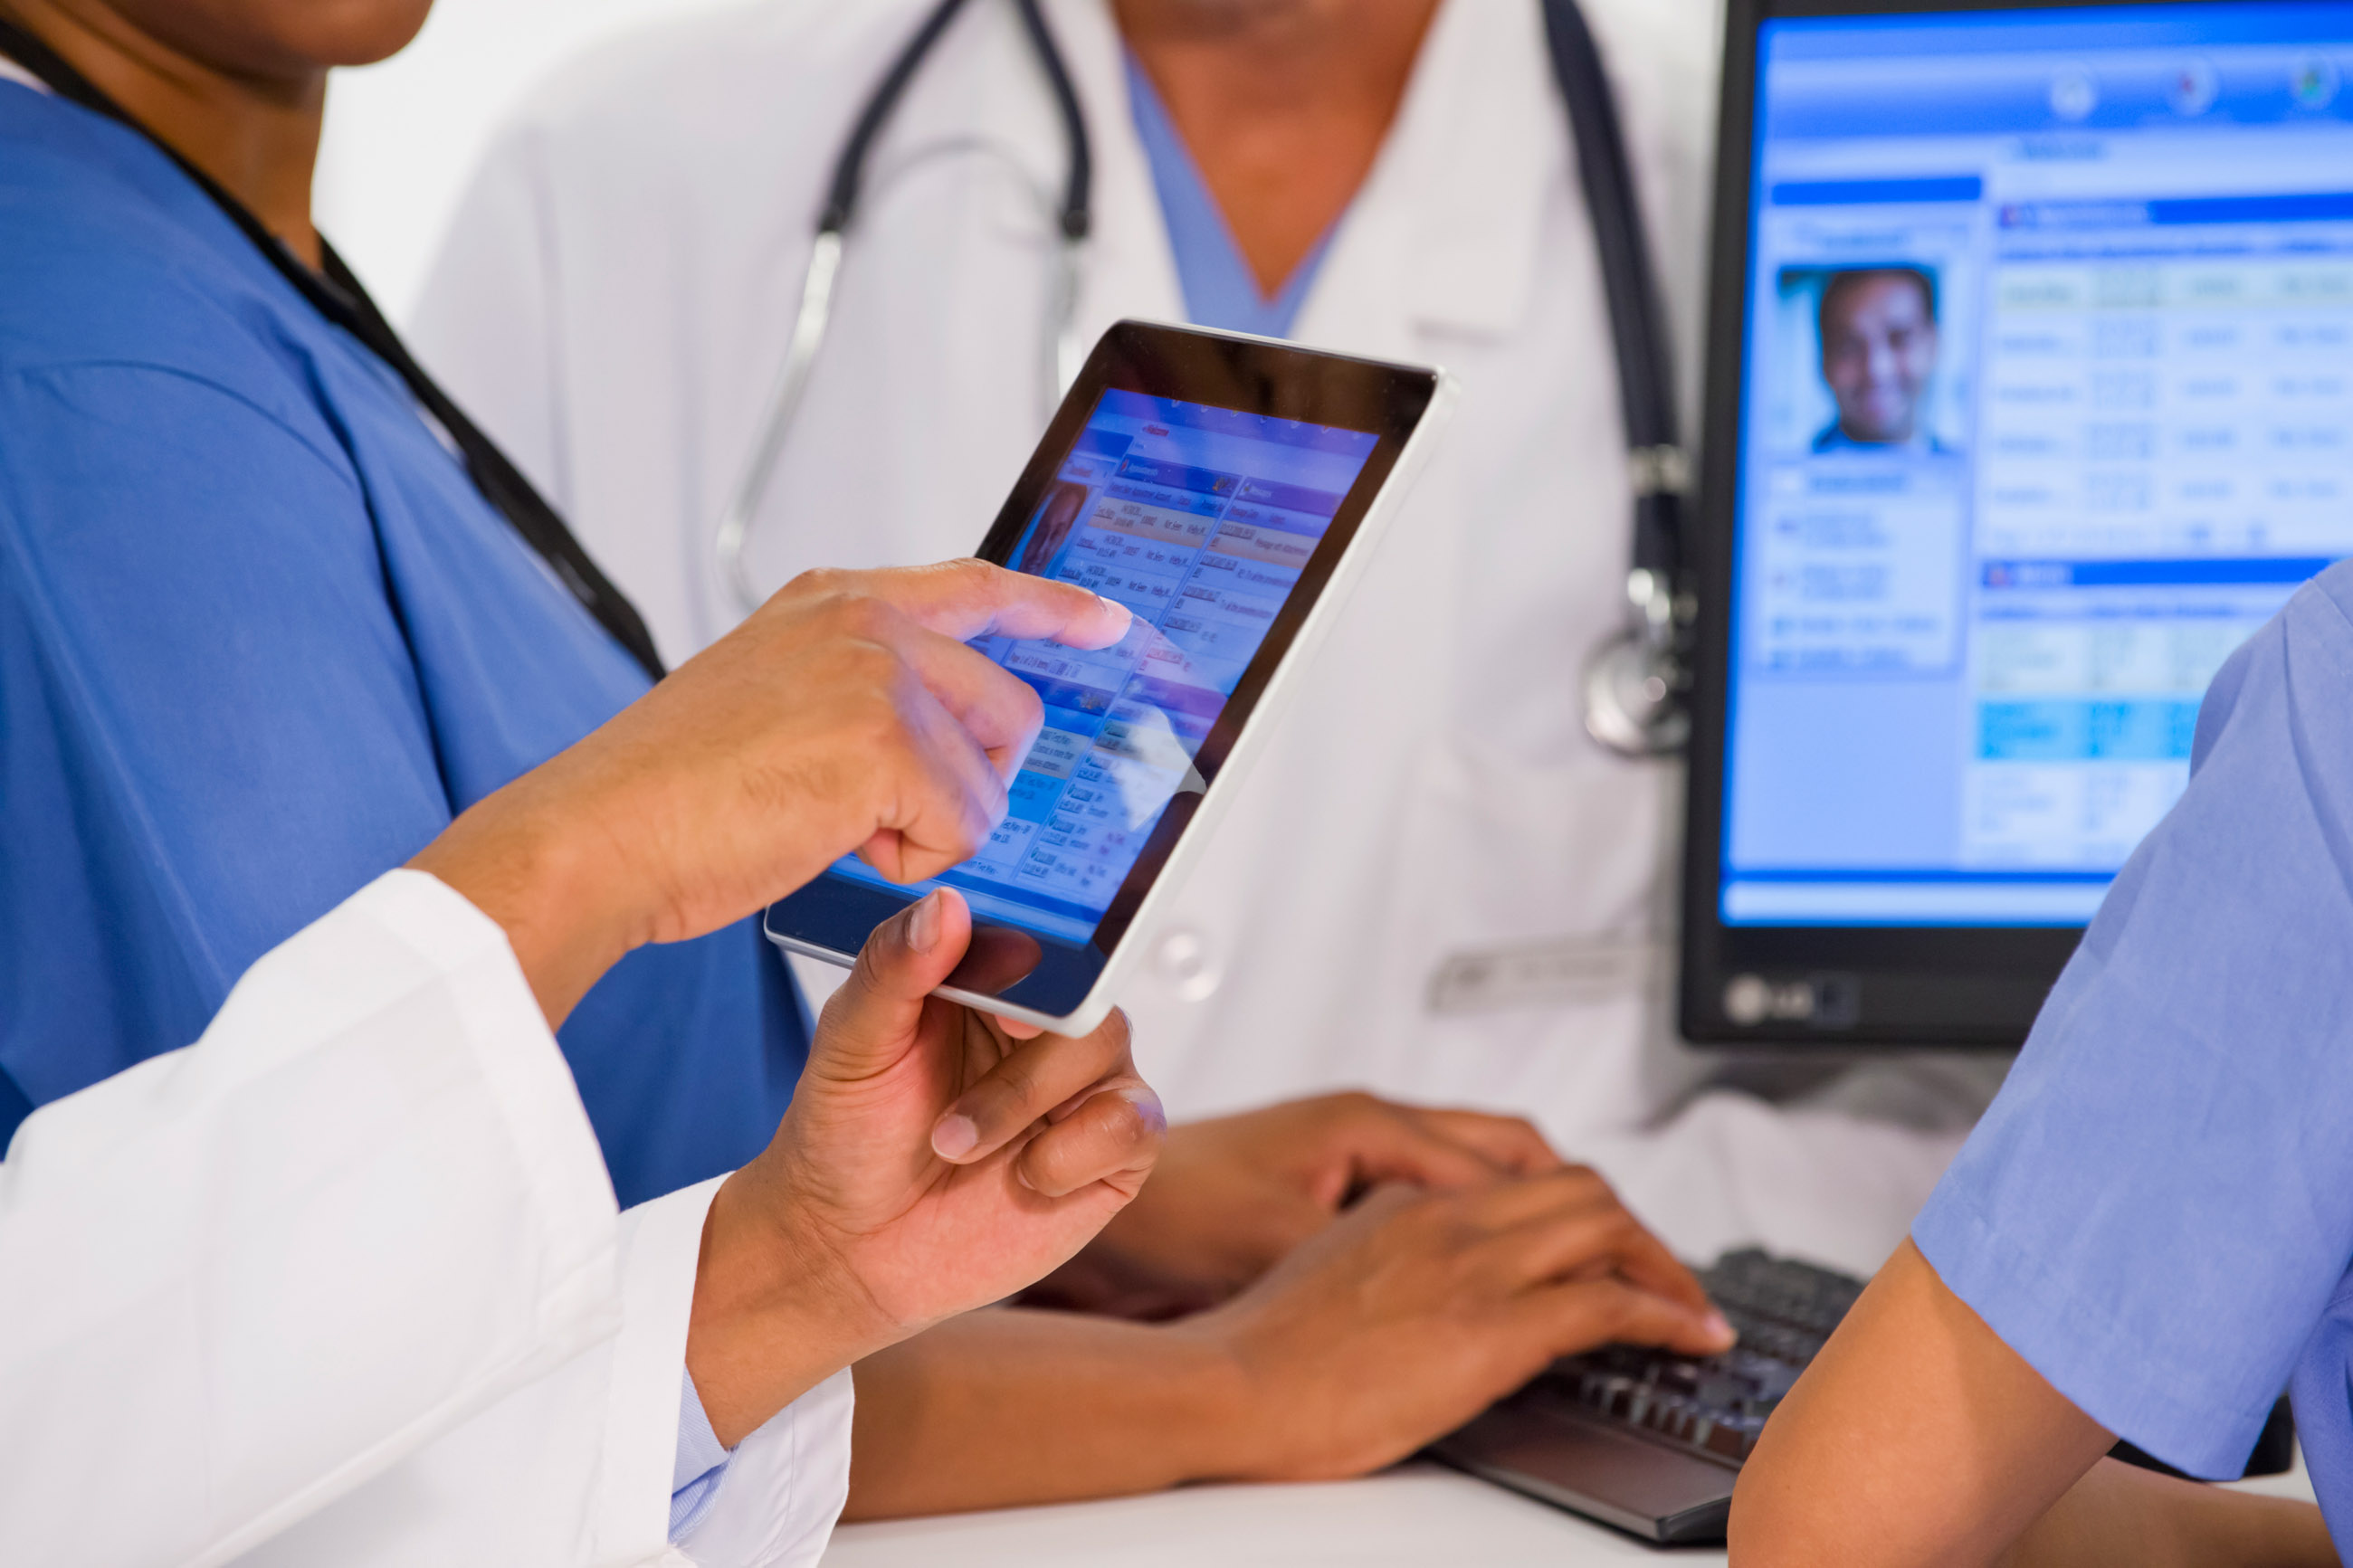 Digital Healthcare: Preventative Health through Gamification